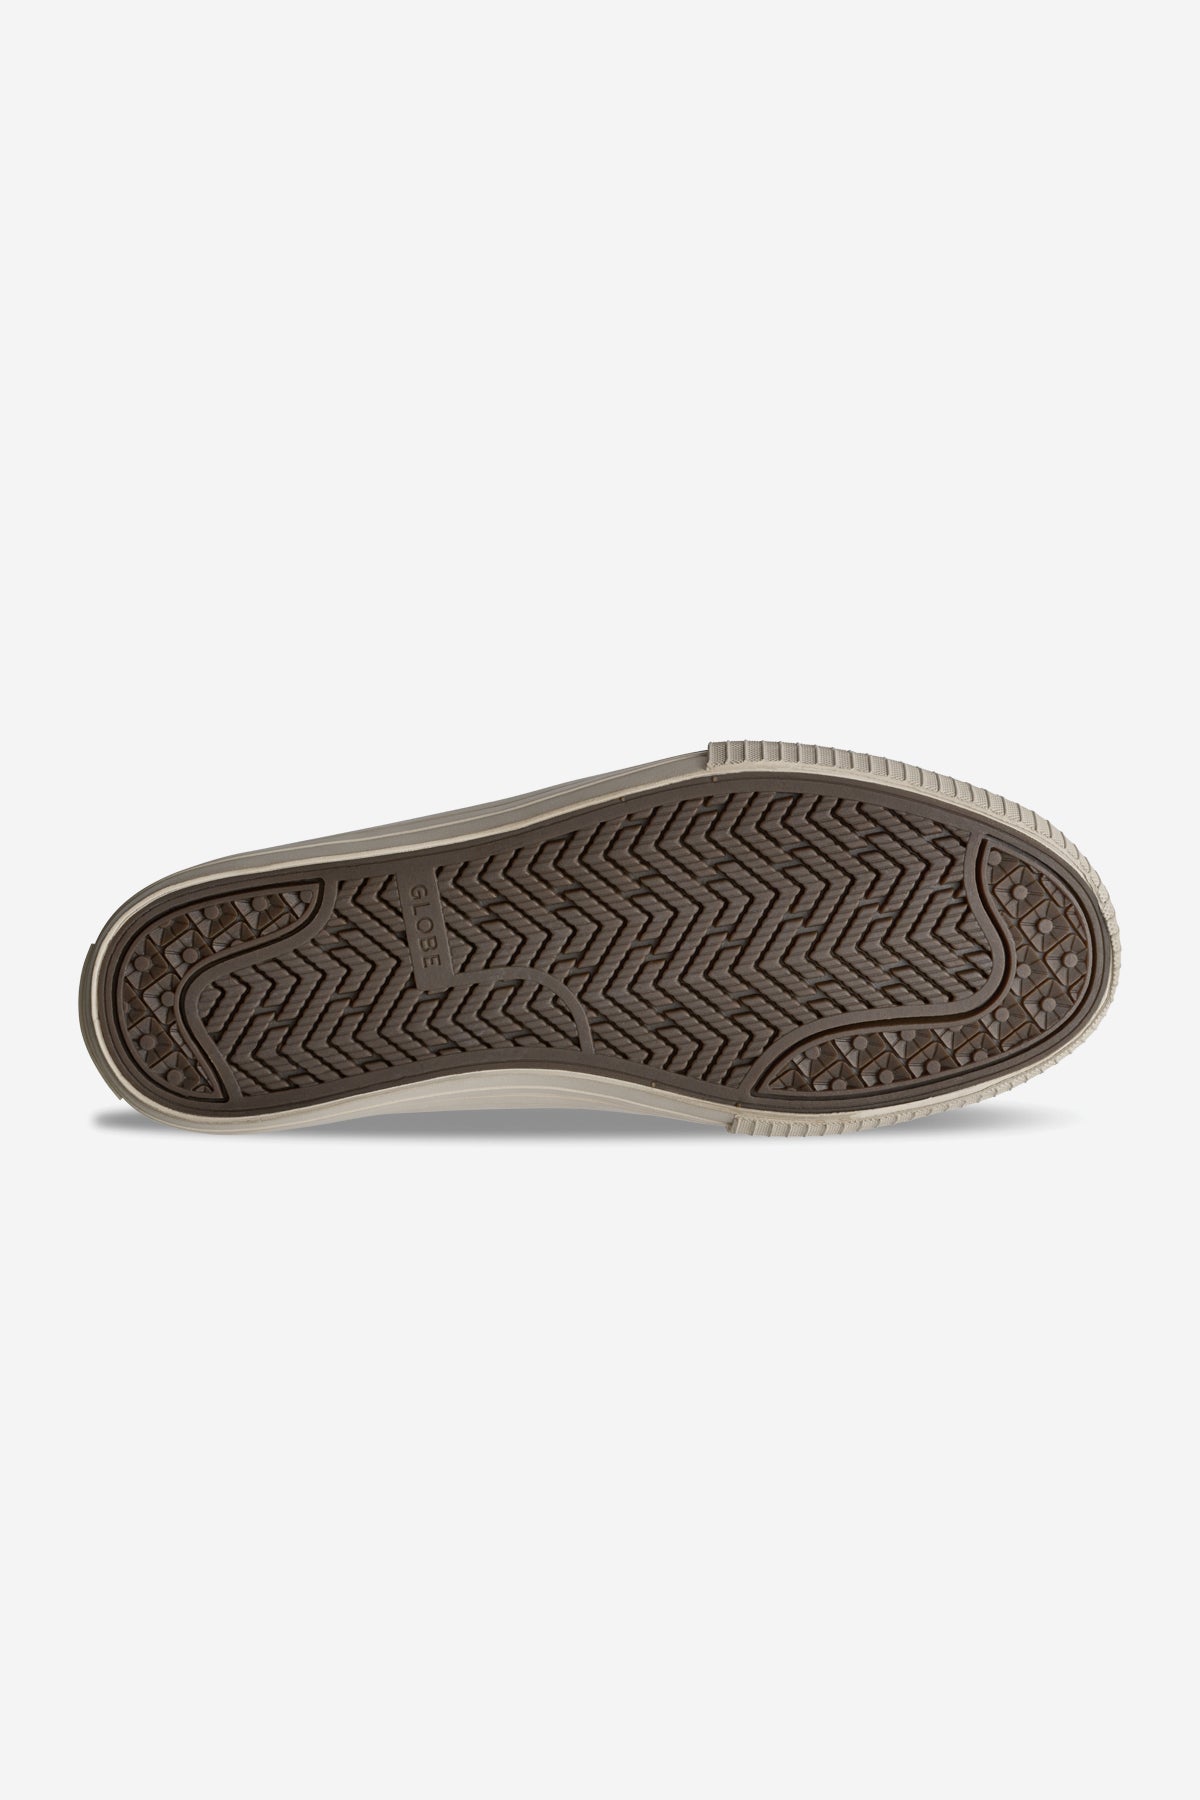 Globe - Gillette - Preto/Creme - skateboard Sapatos